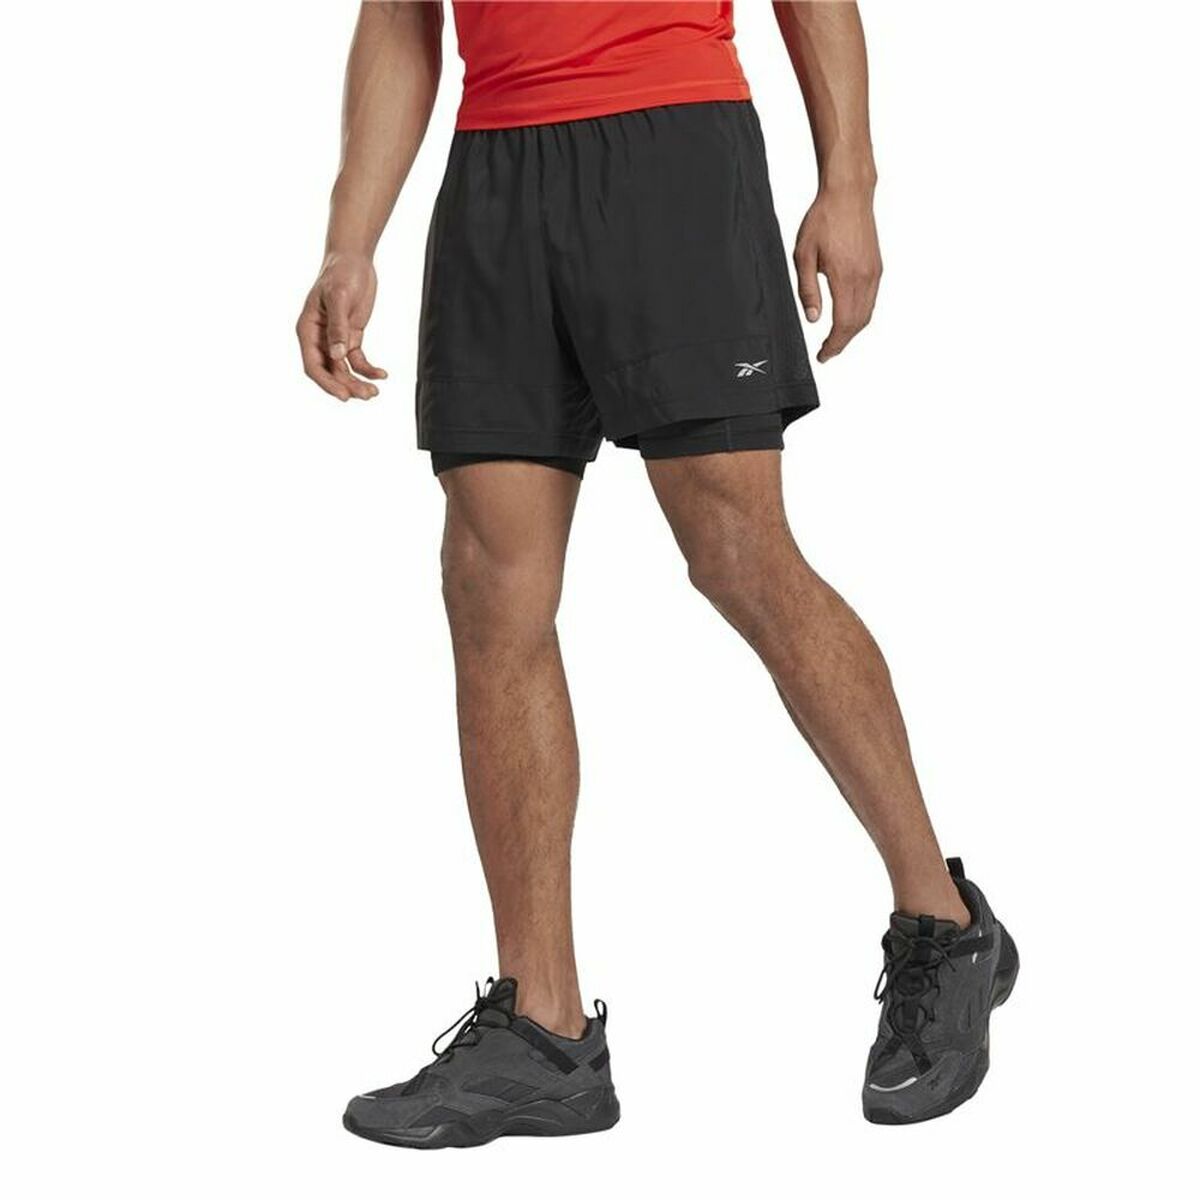 Pantaloni Corti Sportivi da Uomo Reebok Running Essentials Nero